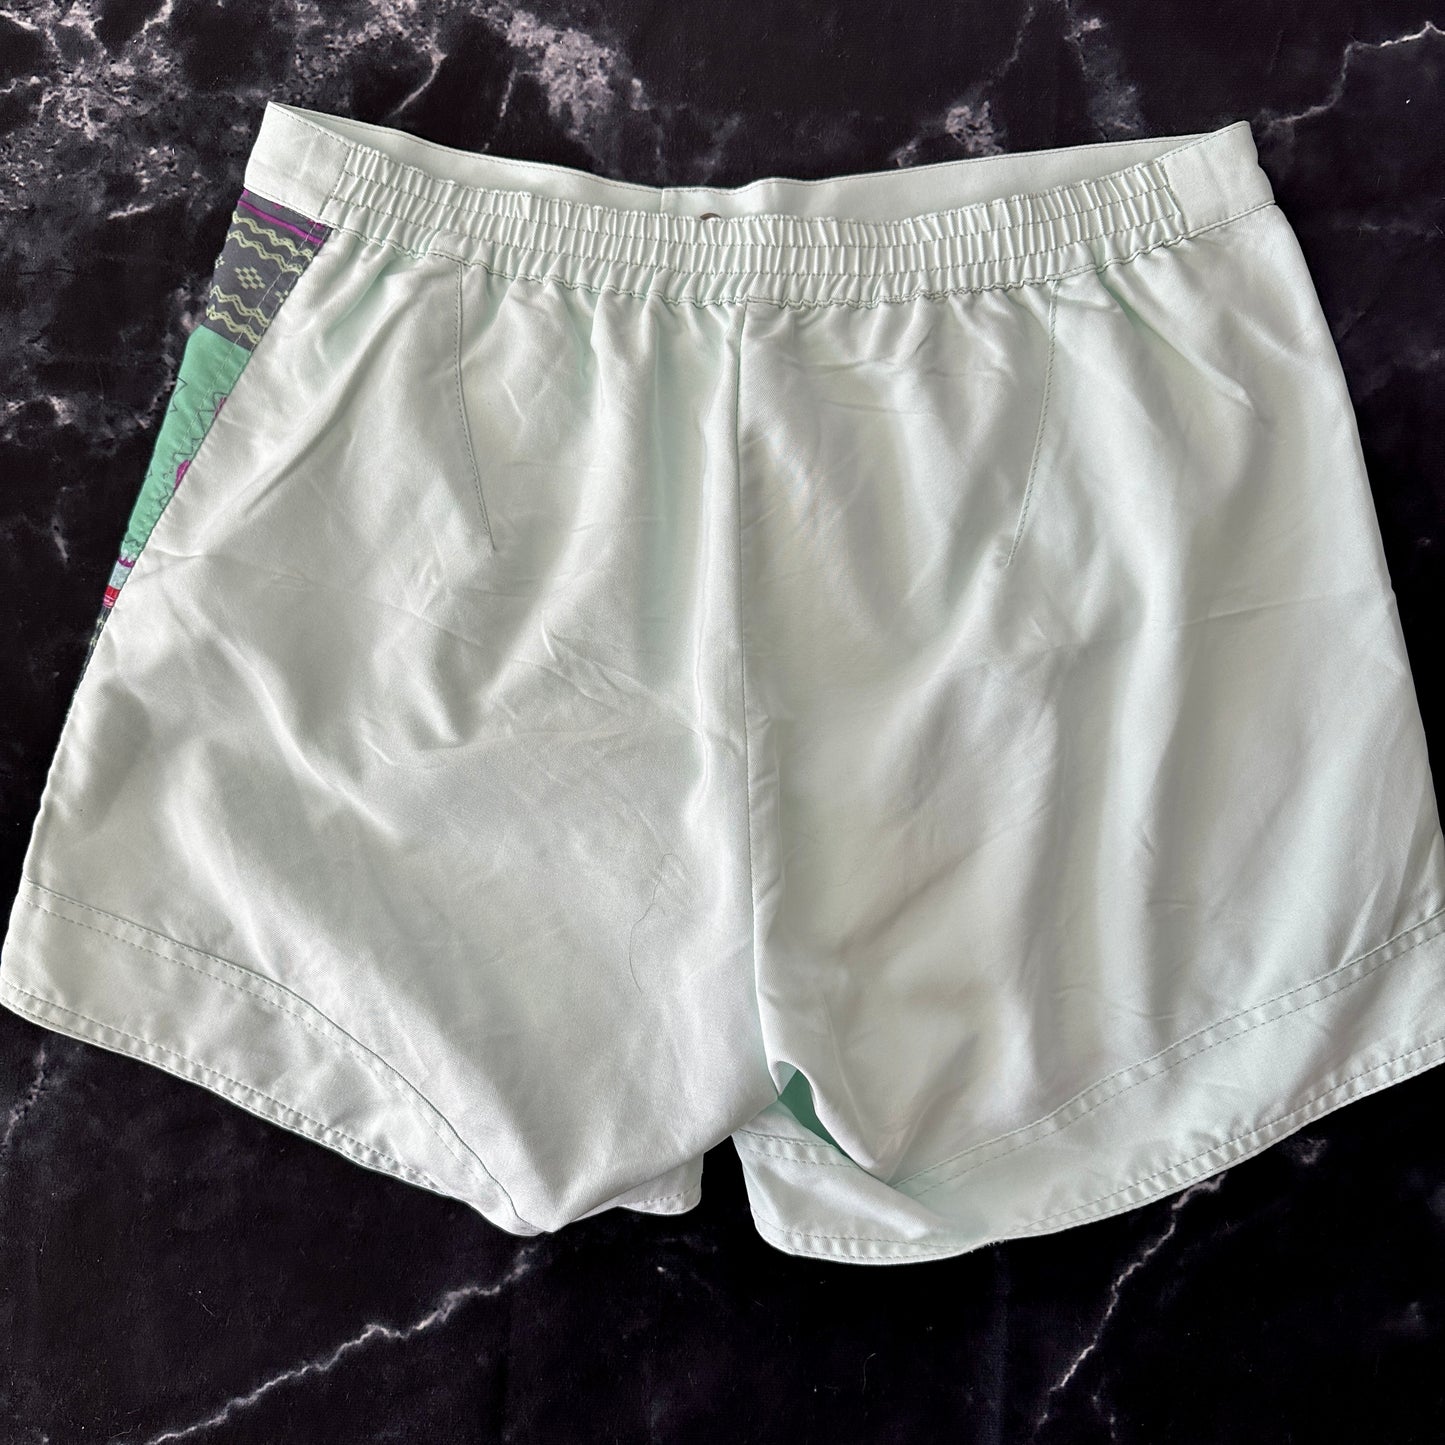 Cerrutti Sport 80s Tennis Beachwear Shorts - 50 / M - Made in Italy - BNWT